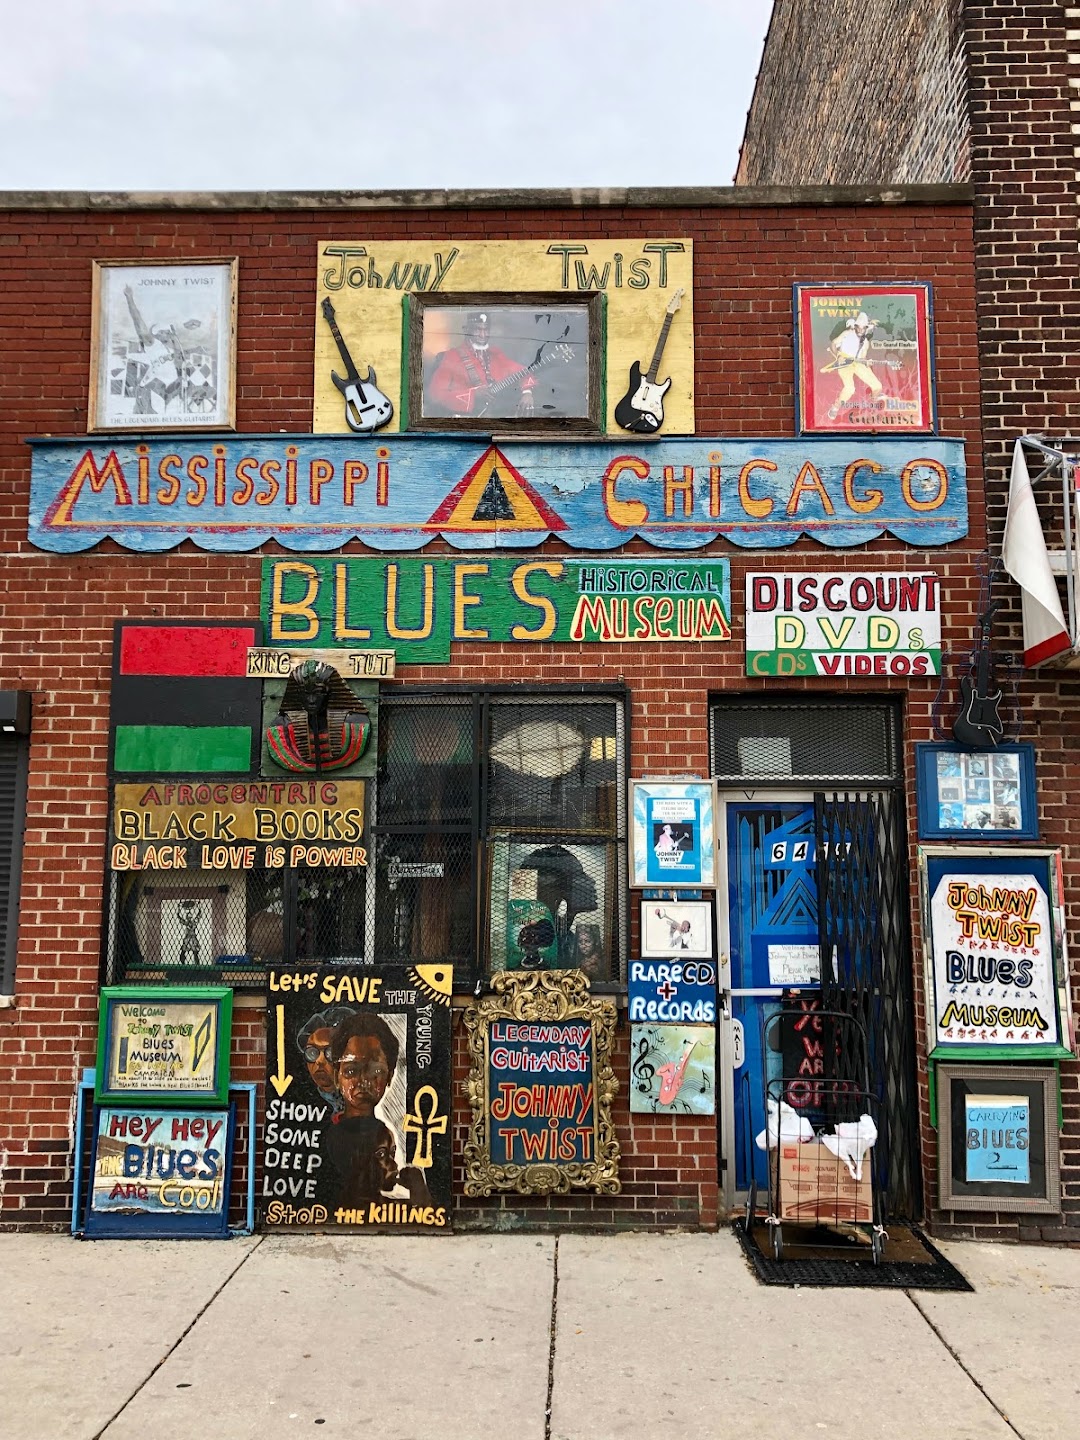 Johnny Twist Blues Museum